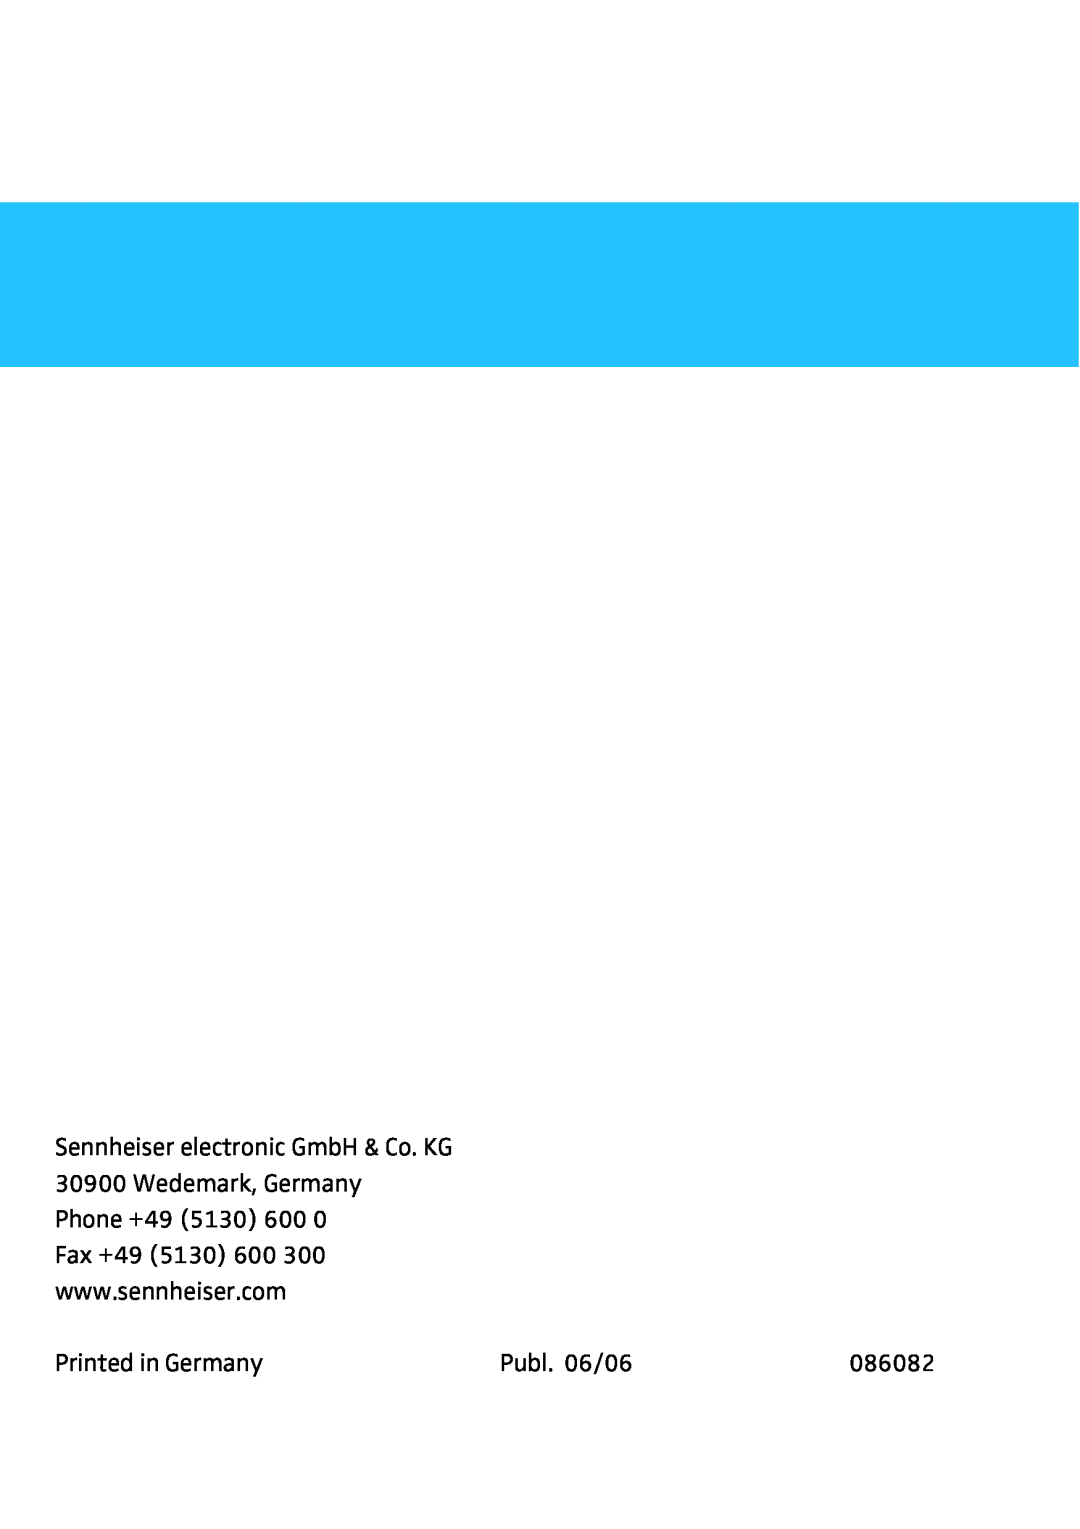 Sennheiser 4974, HD 280 instruction manual Publ. 06/06, 086082 